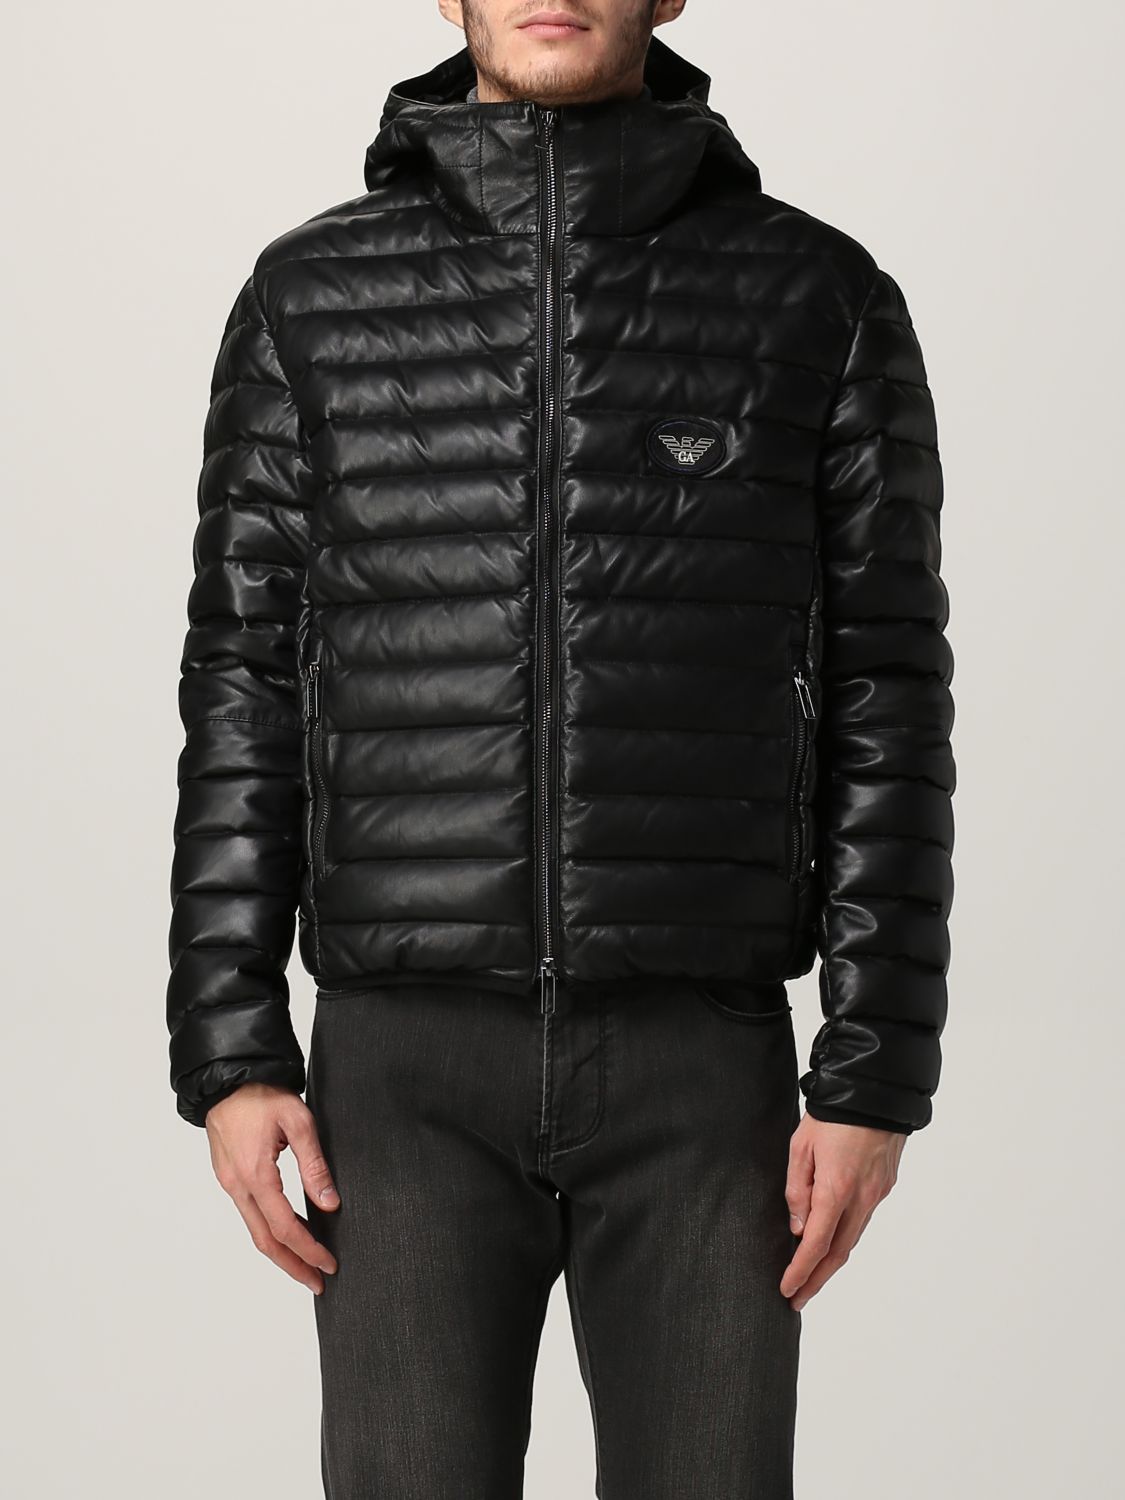 EMPORIO ARMANI: leather down jacket - Black | Emporio Armani jacket B1R03P  B1P03 online on 